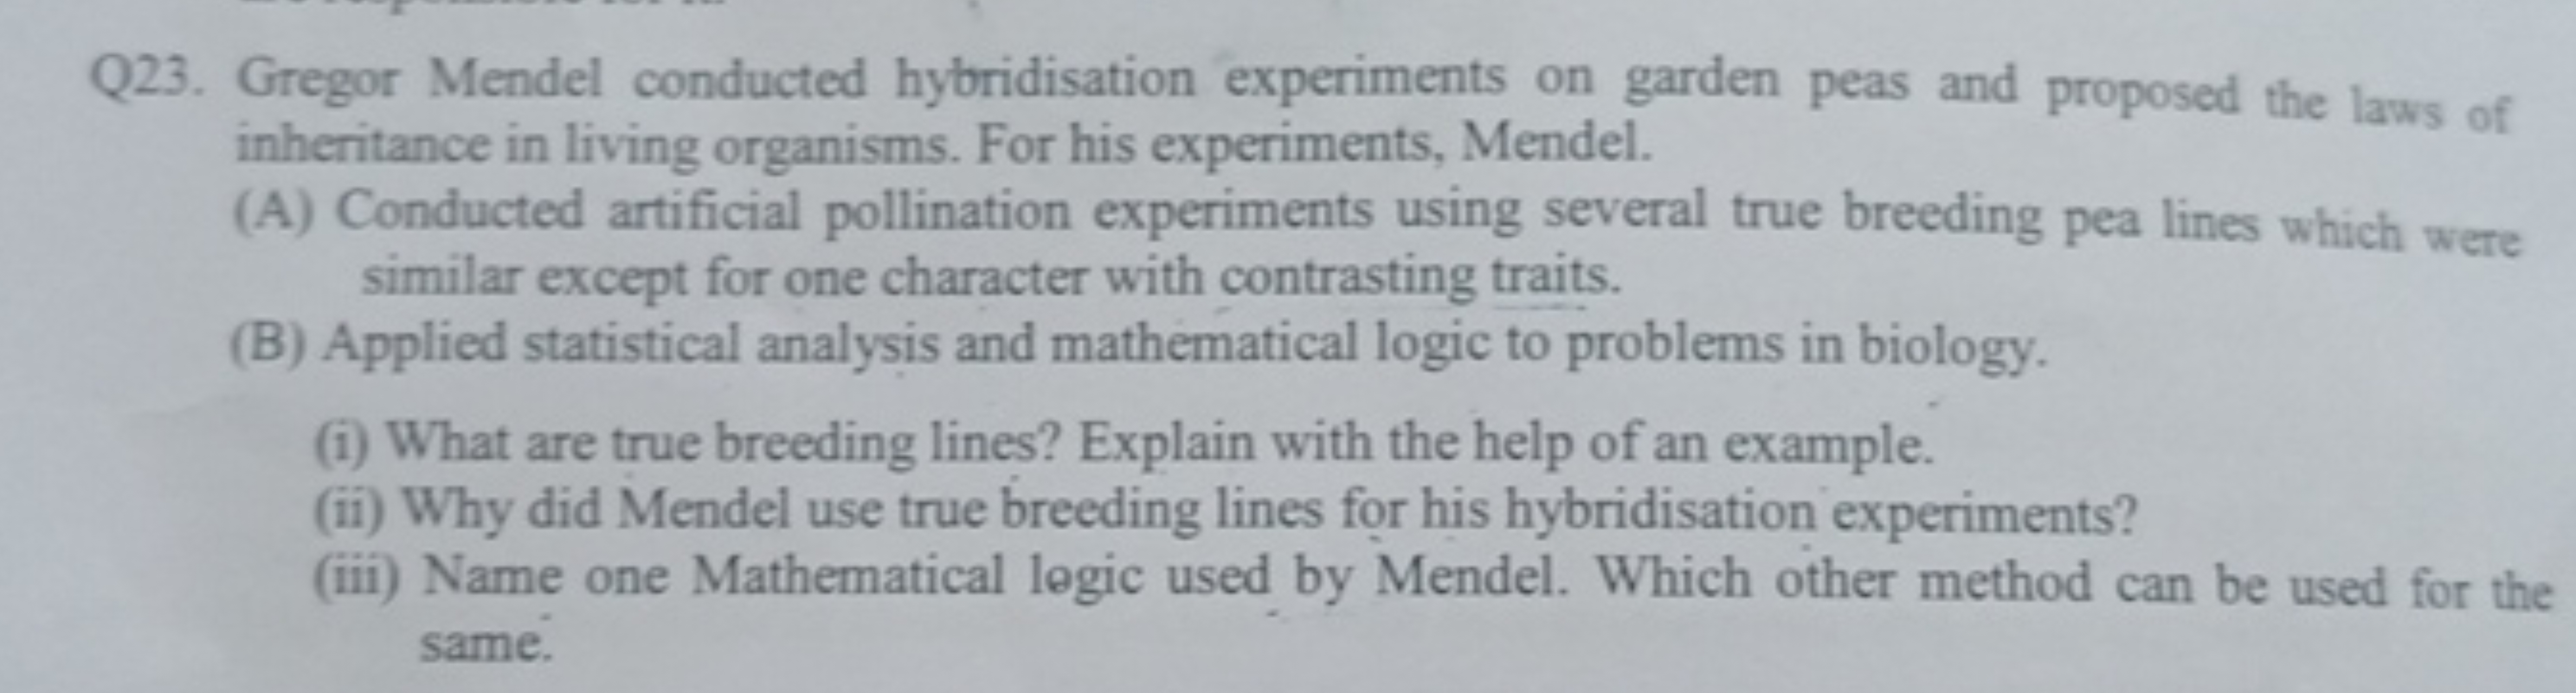 Q23. Gregor Mendel conducted hybridisation experiments on garden peas 